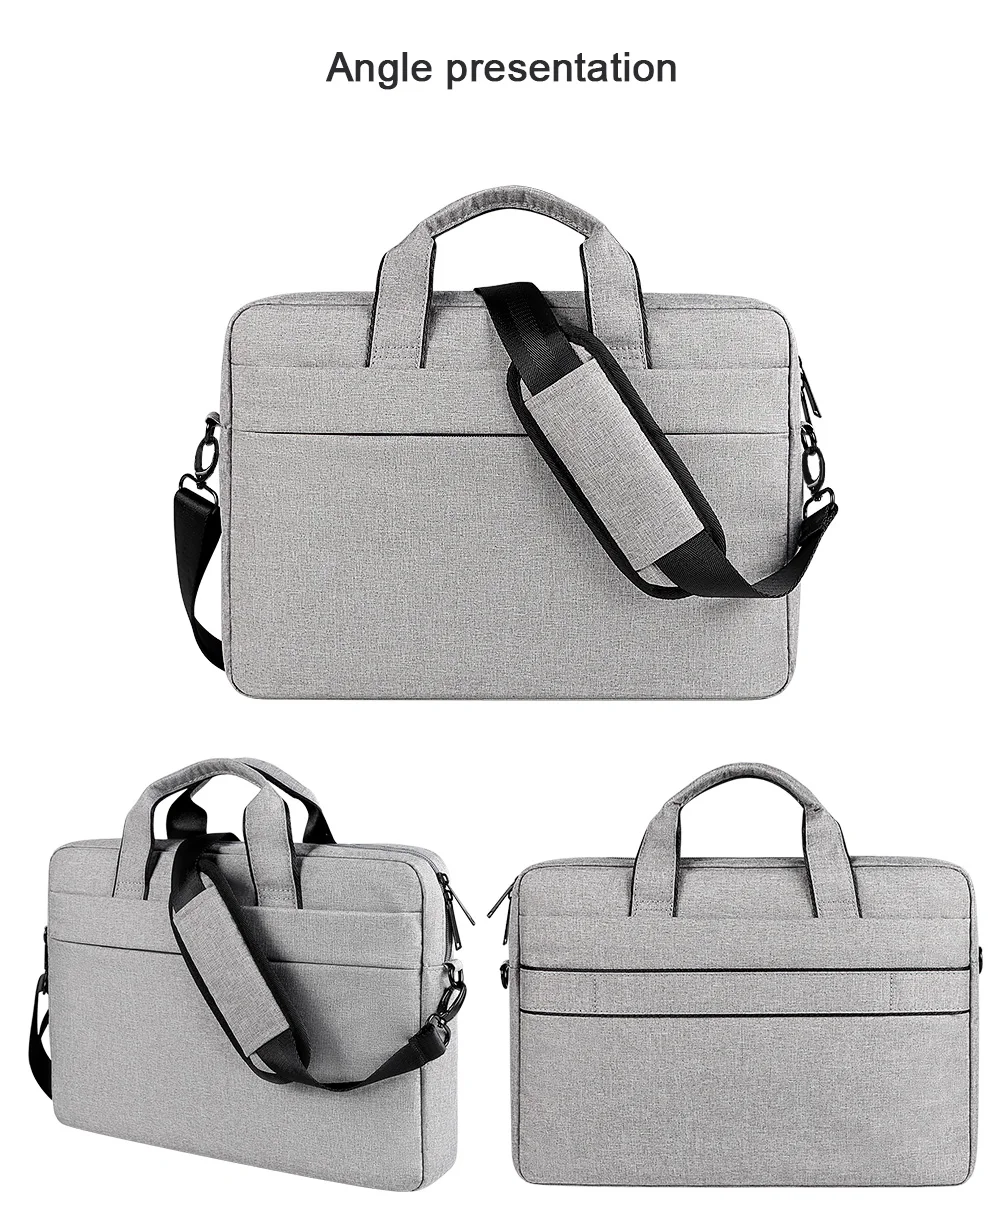 Wholesale Fashionable Laptop Bags Bag Laptop Shoulder Bag - Buy Bag ...